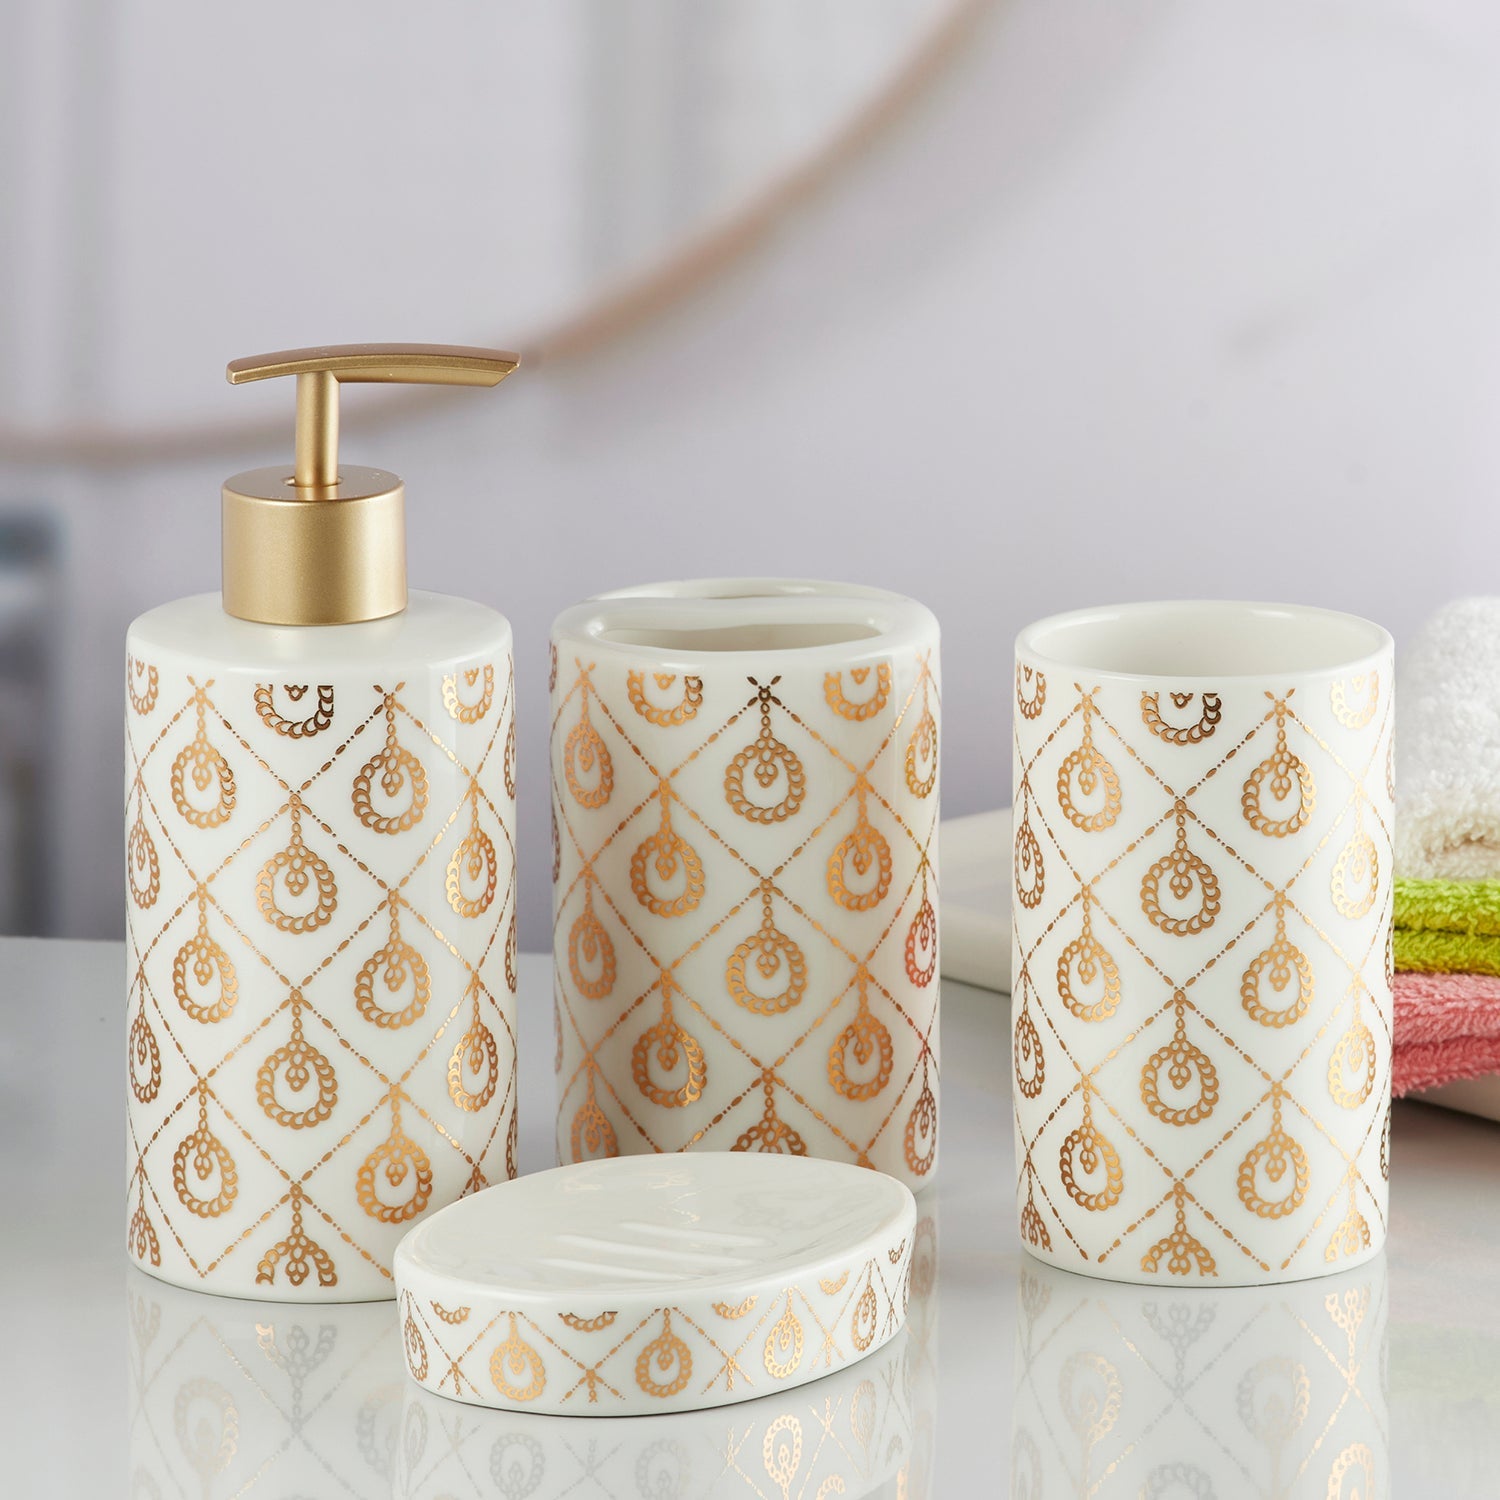 Ceramic Bathroom Accessories Set of 4 Bath Set with Soap Dispenser (10072)